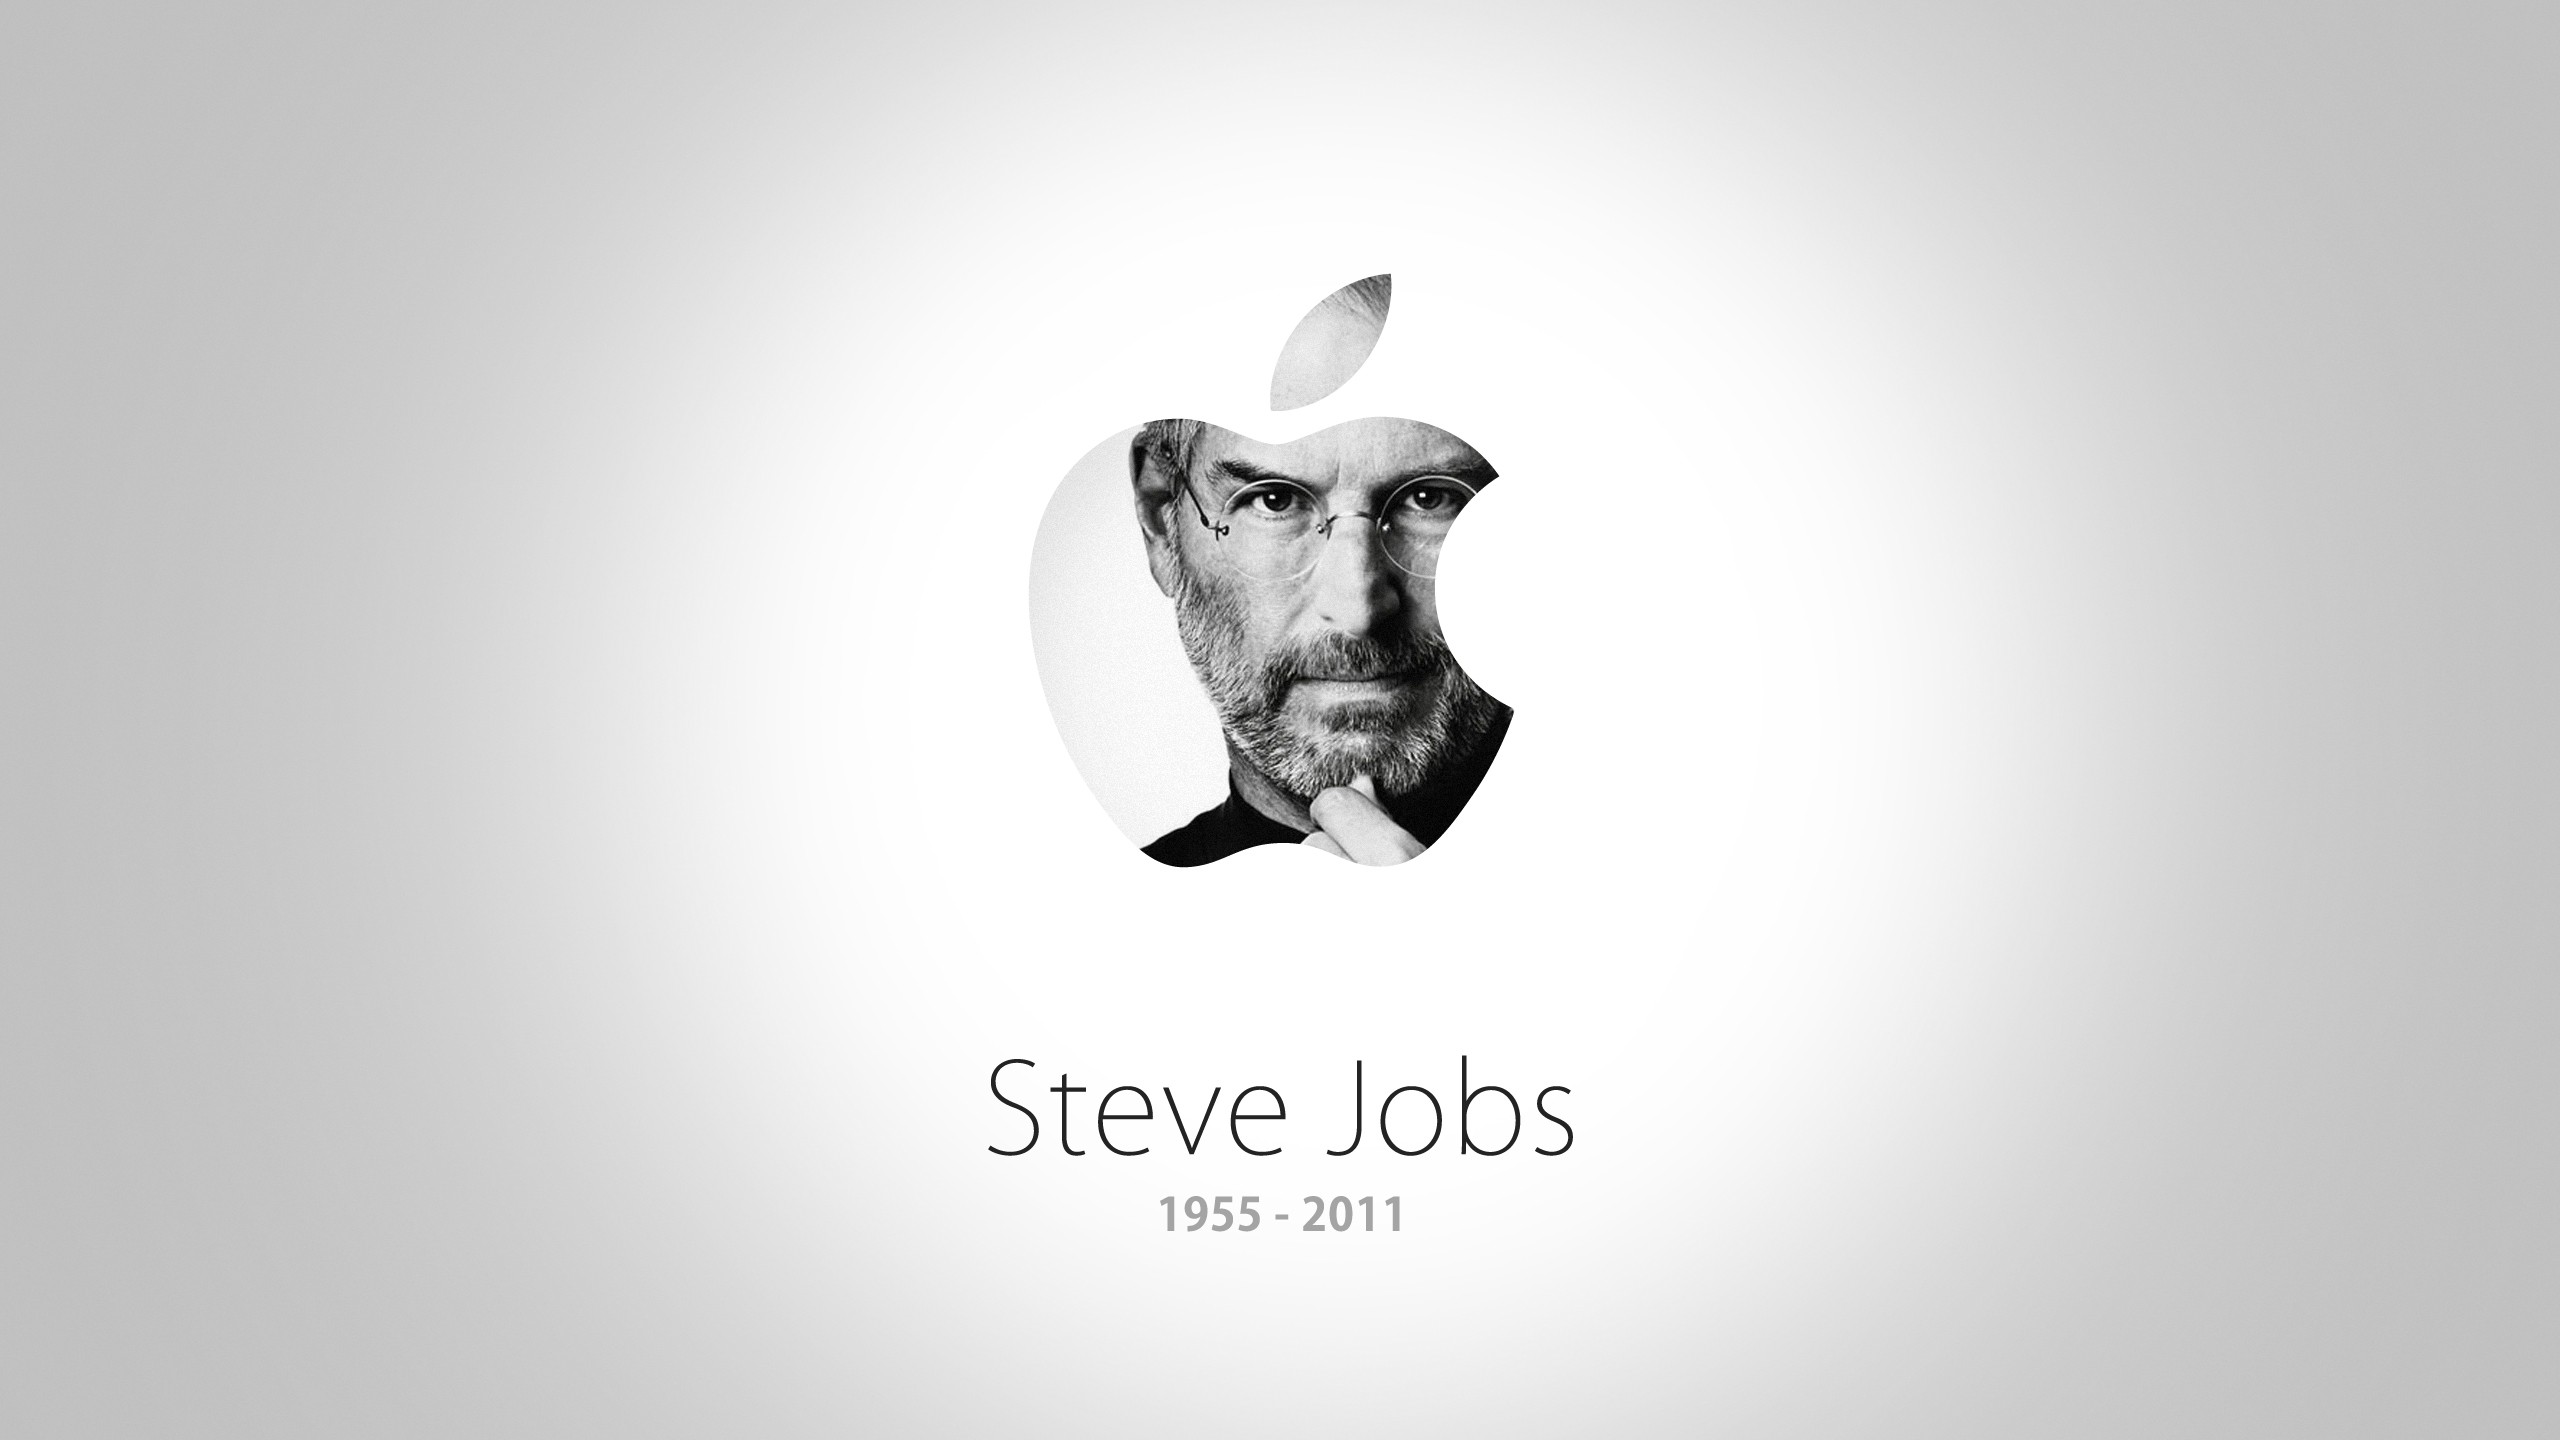 Wallpaper Steve Jobs Theater, abstract, Apple November 2020 Event, 4K, OS  #23161